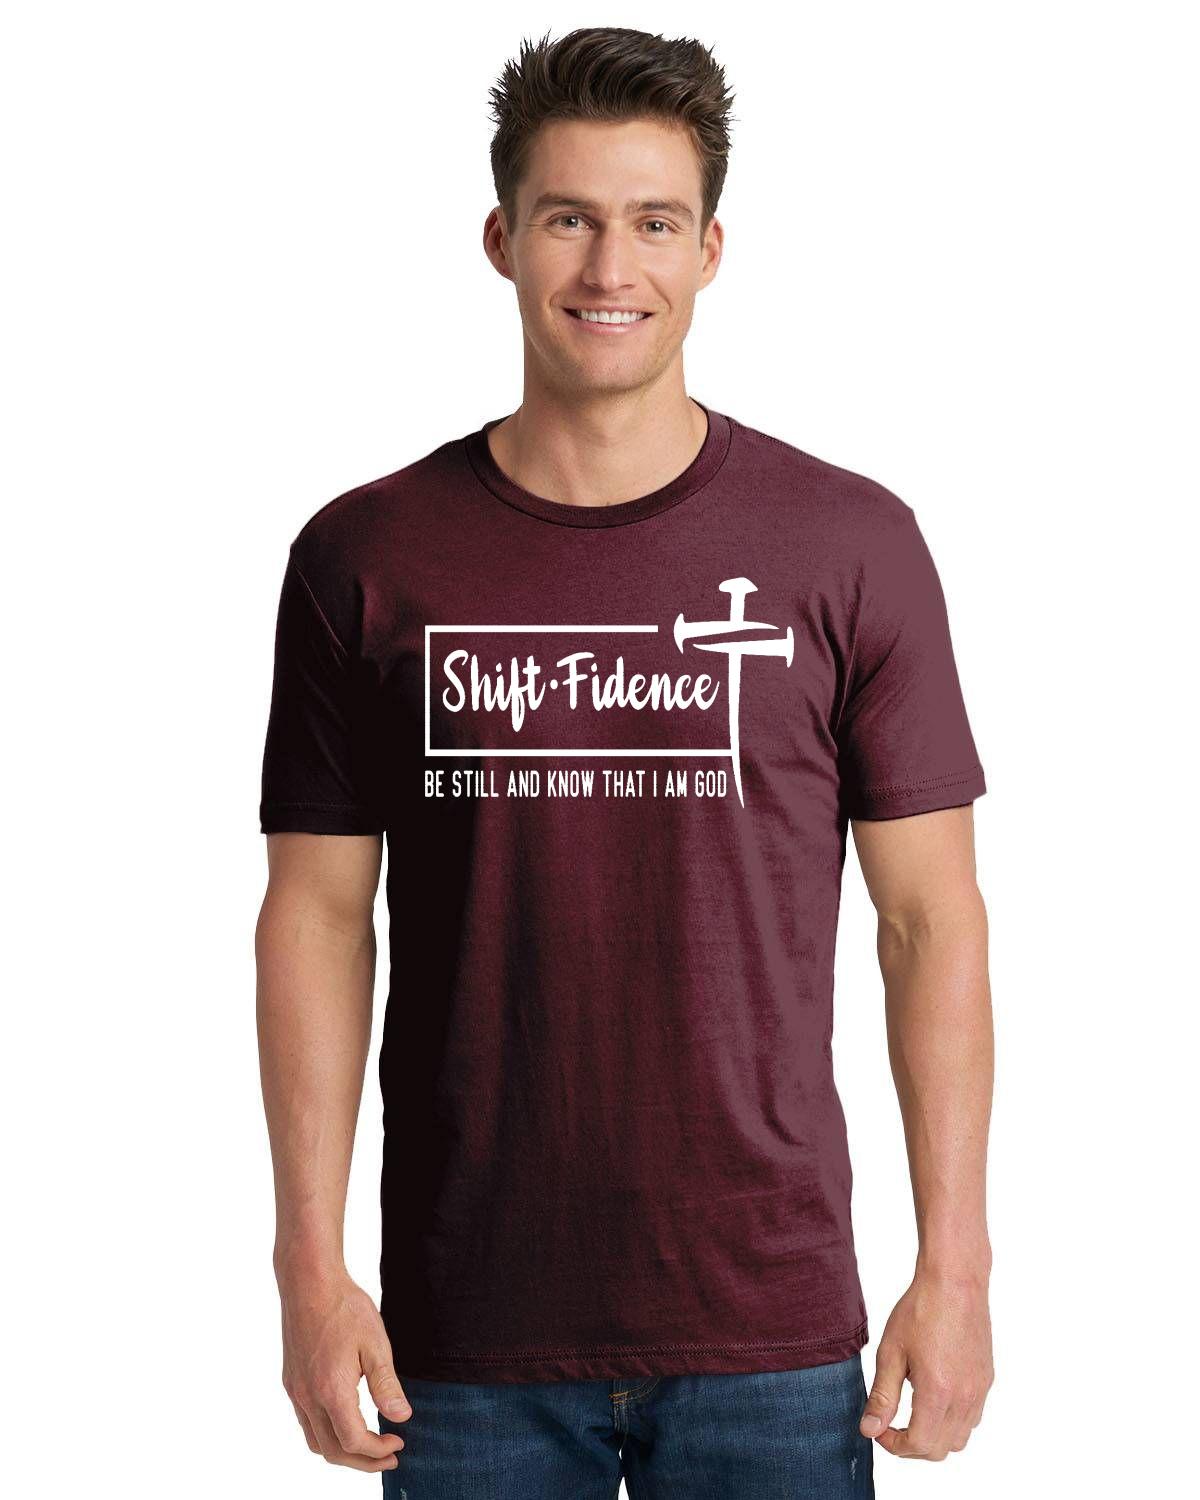 Shift-Fidence Unisex Cotton T-Shirt